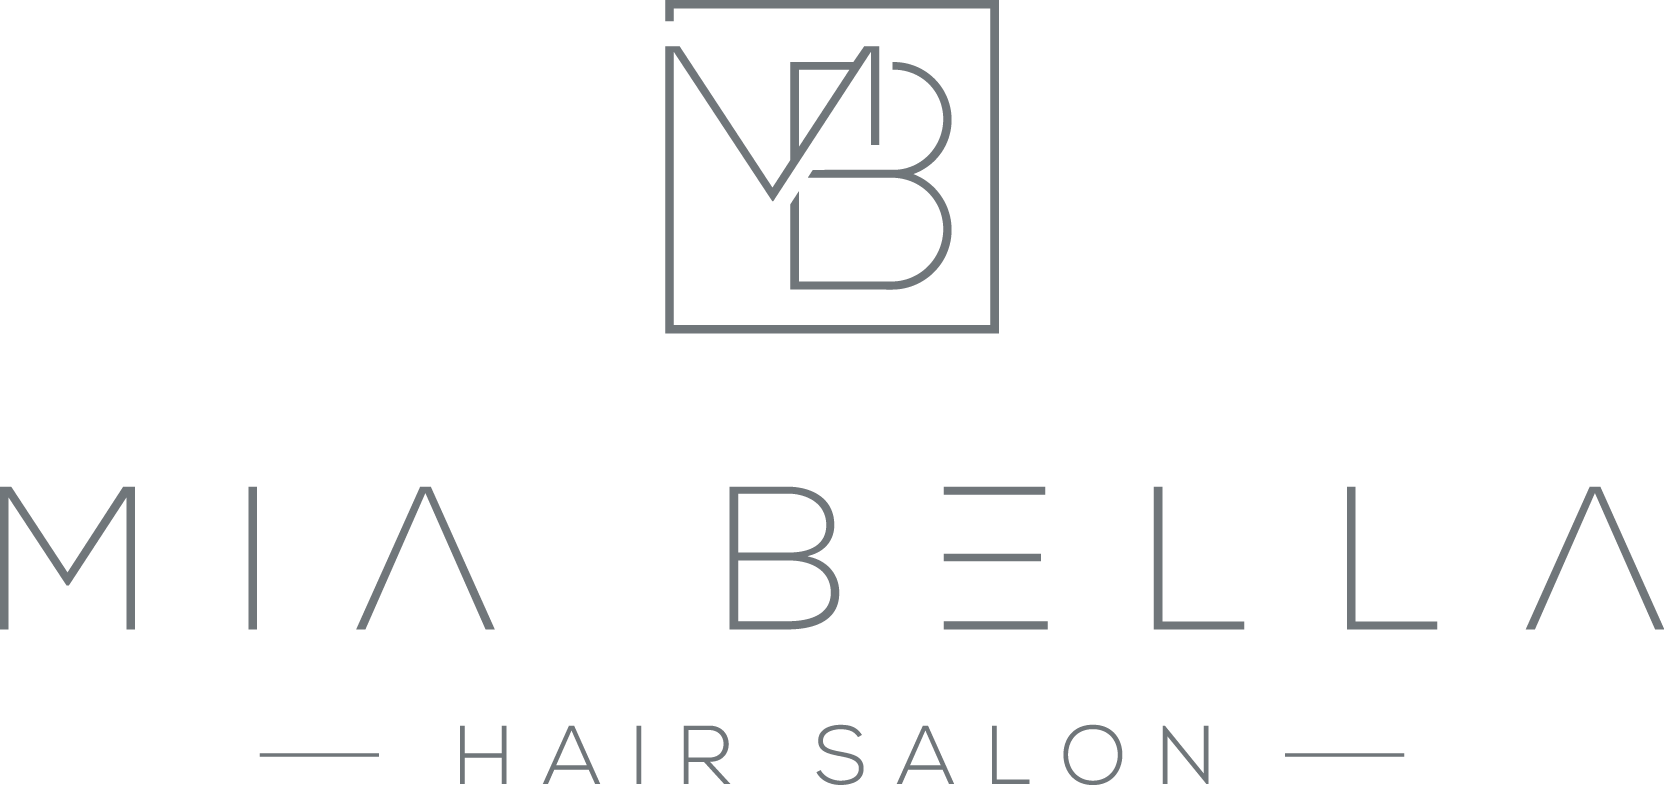 A Hair Salon Provides Various Services To Clients